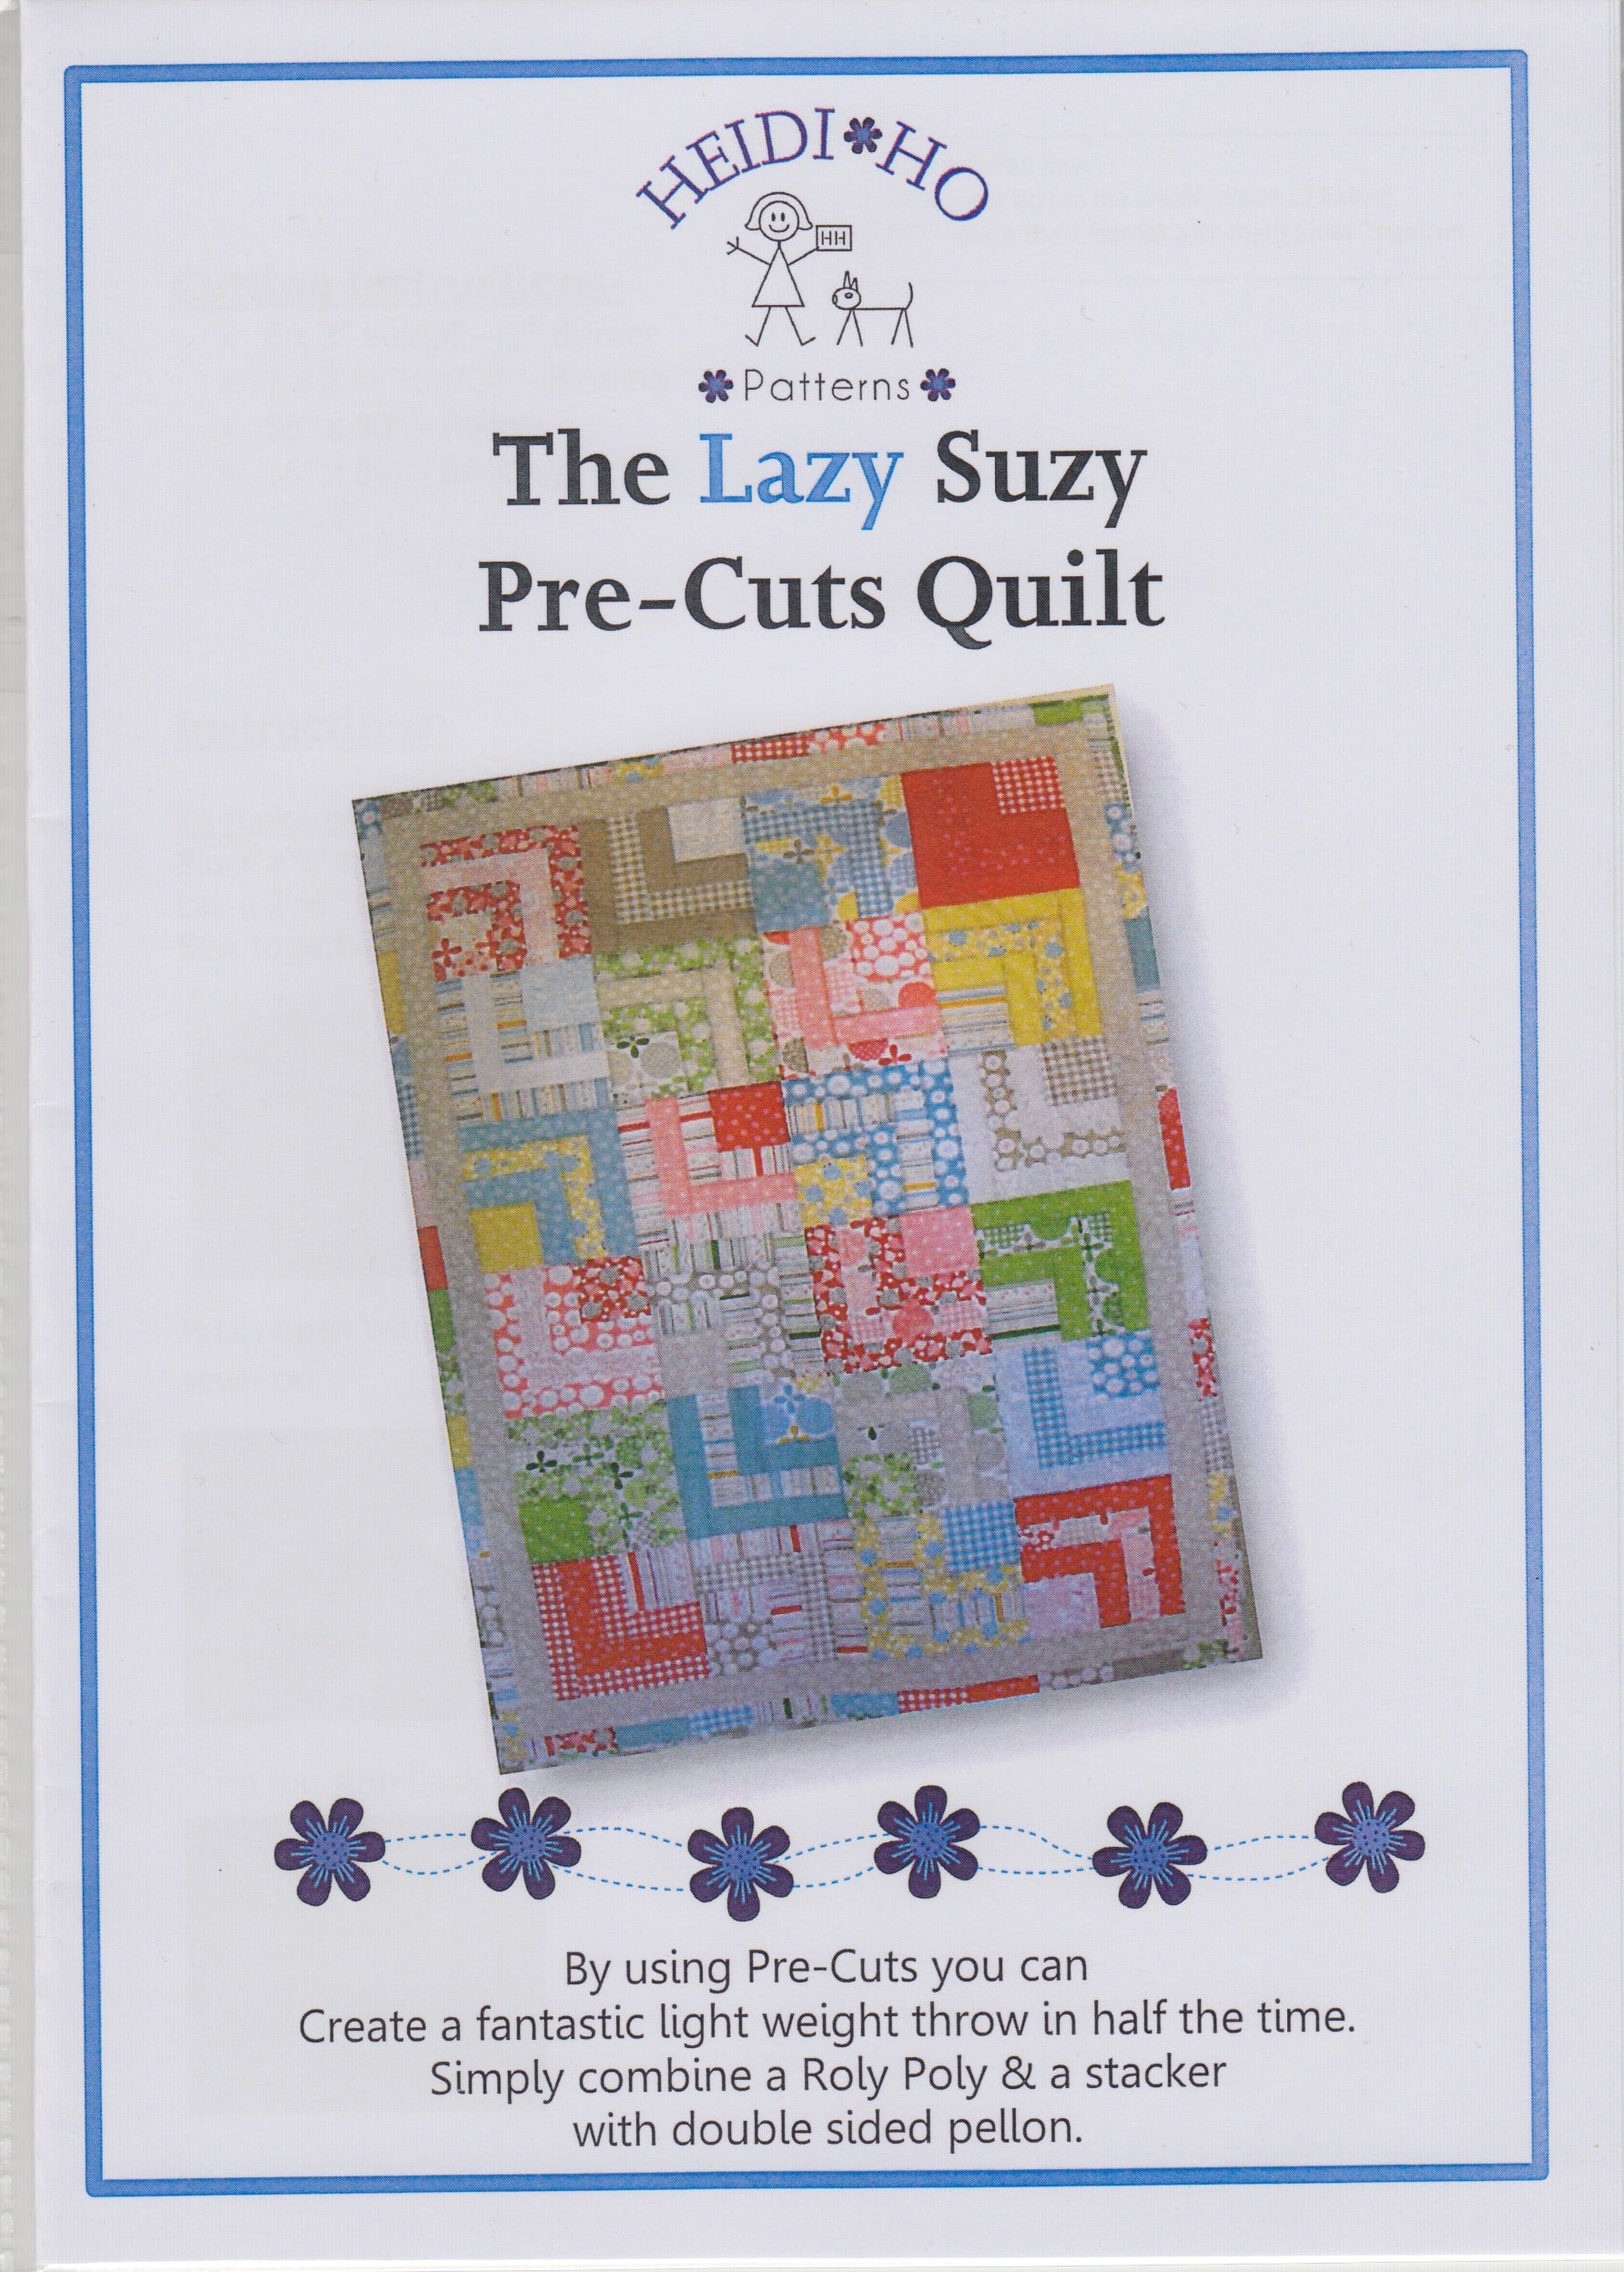 THE LAZY SUZY PRE-CUTS QUILT PATTERN - by Australian Designer Heidi Ho Patterns